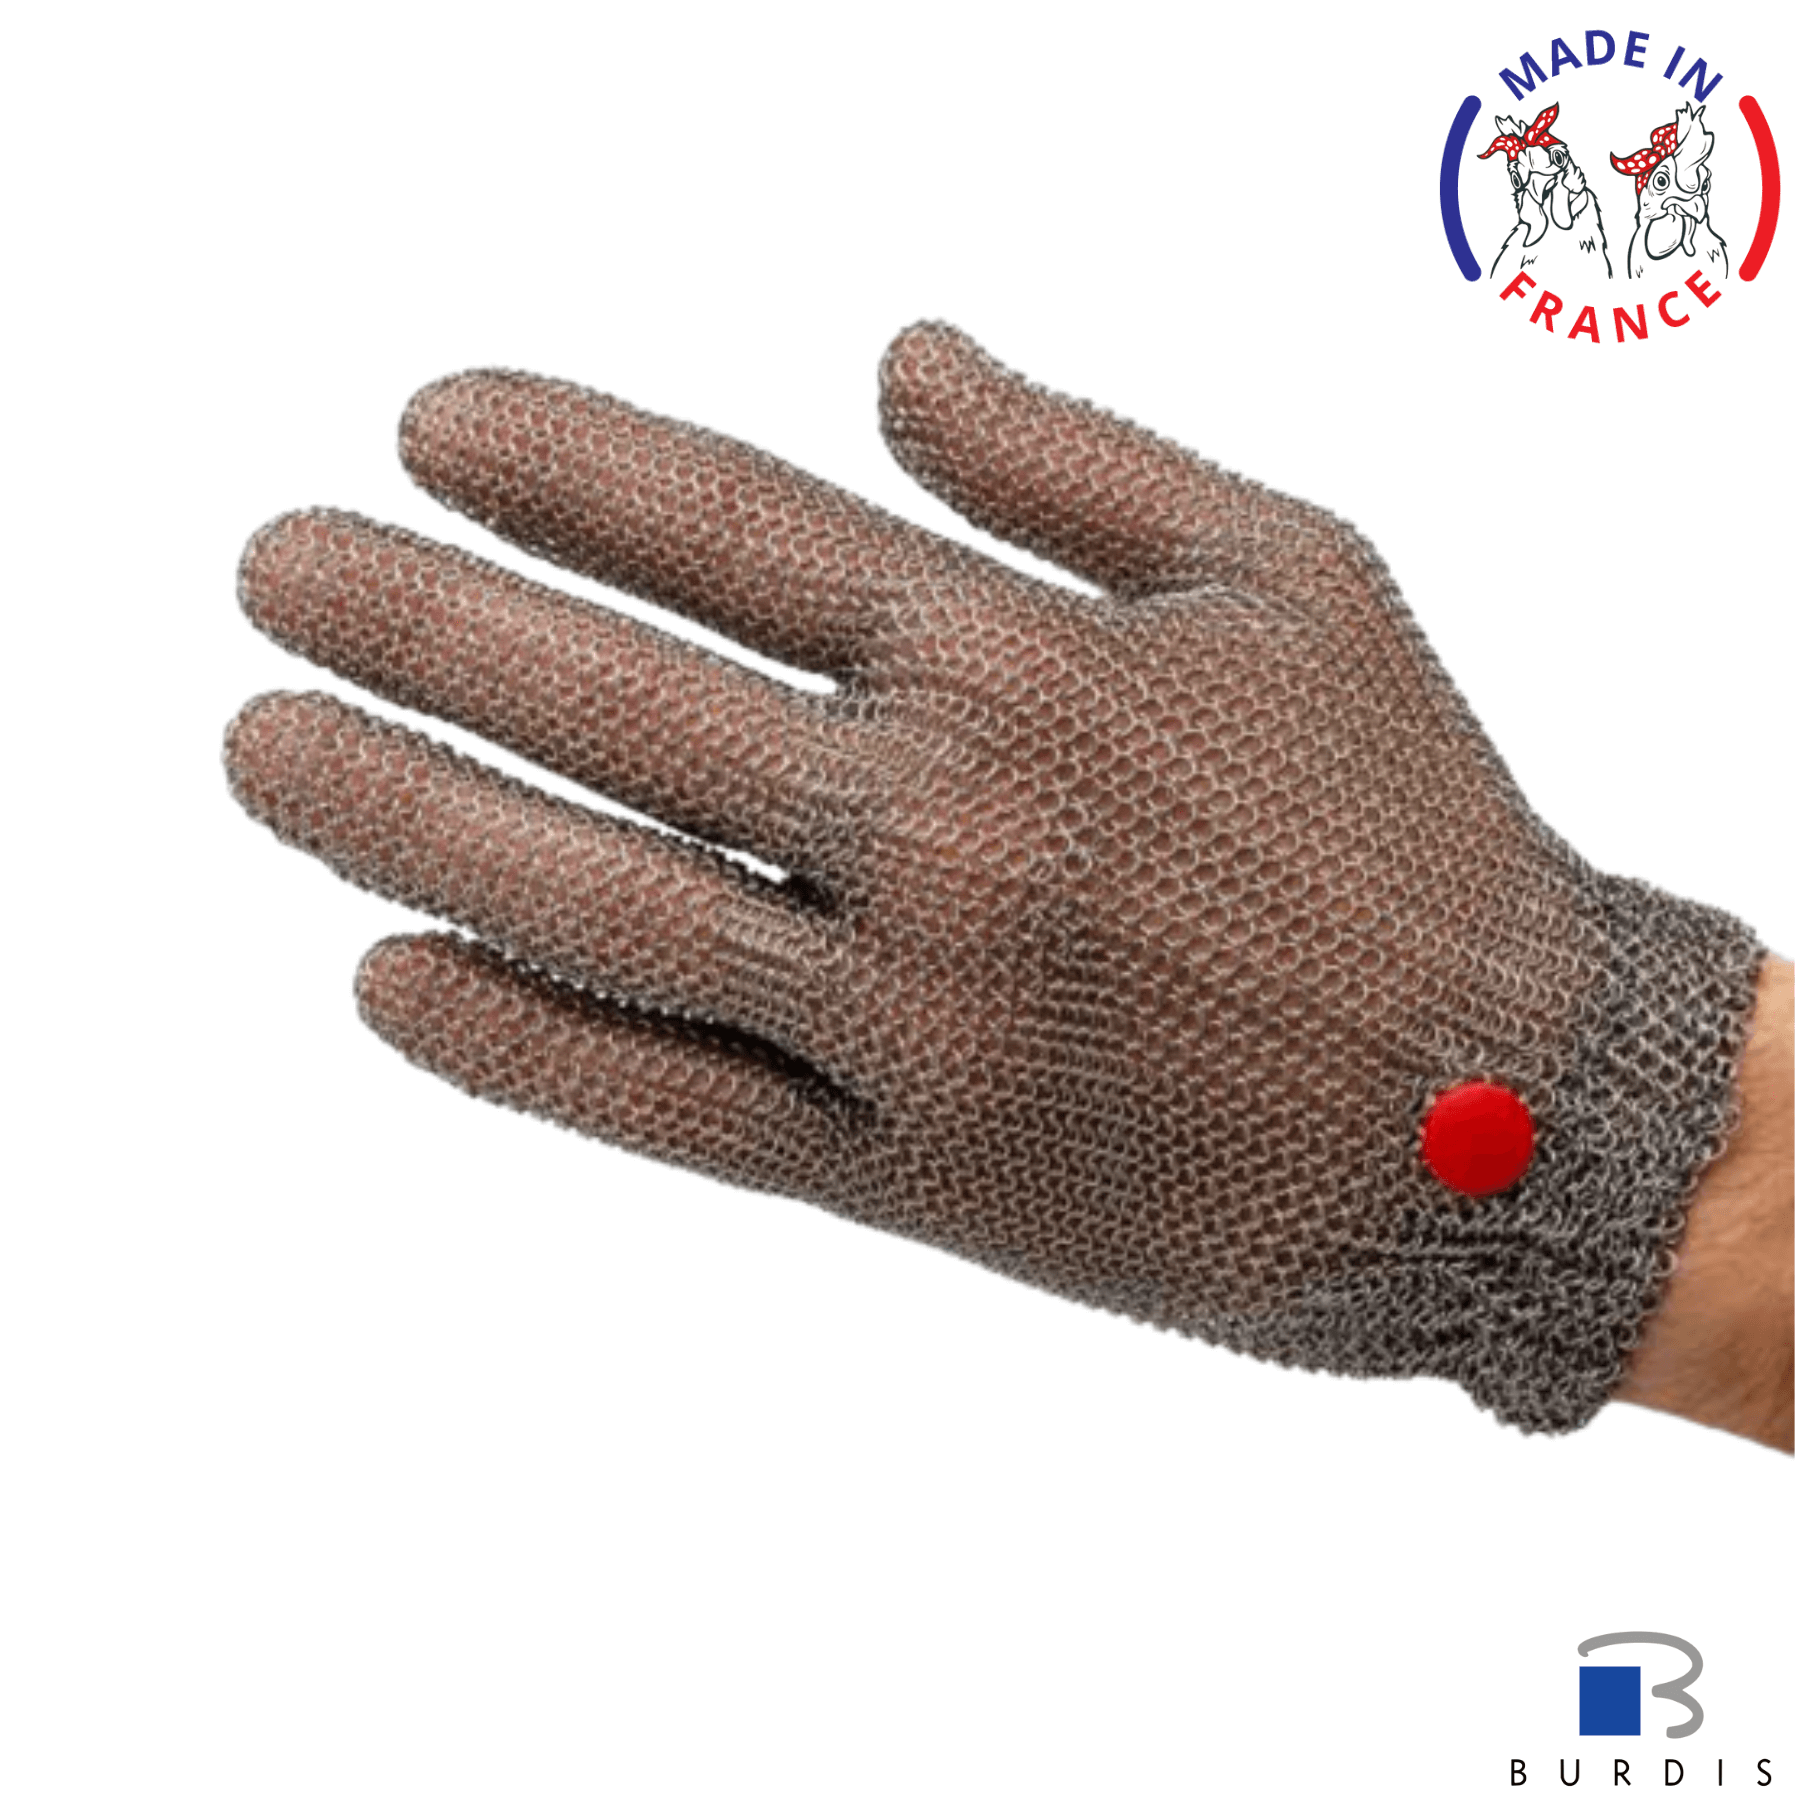 https://media2.burdis.fr/2192-thickbox_default/stainless-steel-metal-mesh-gloves.jpg